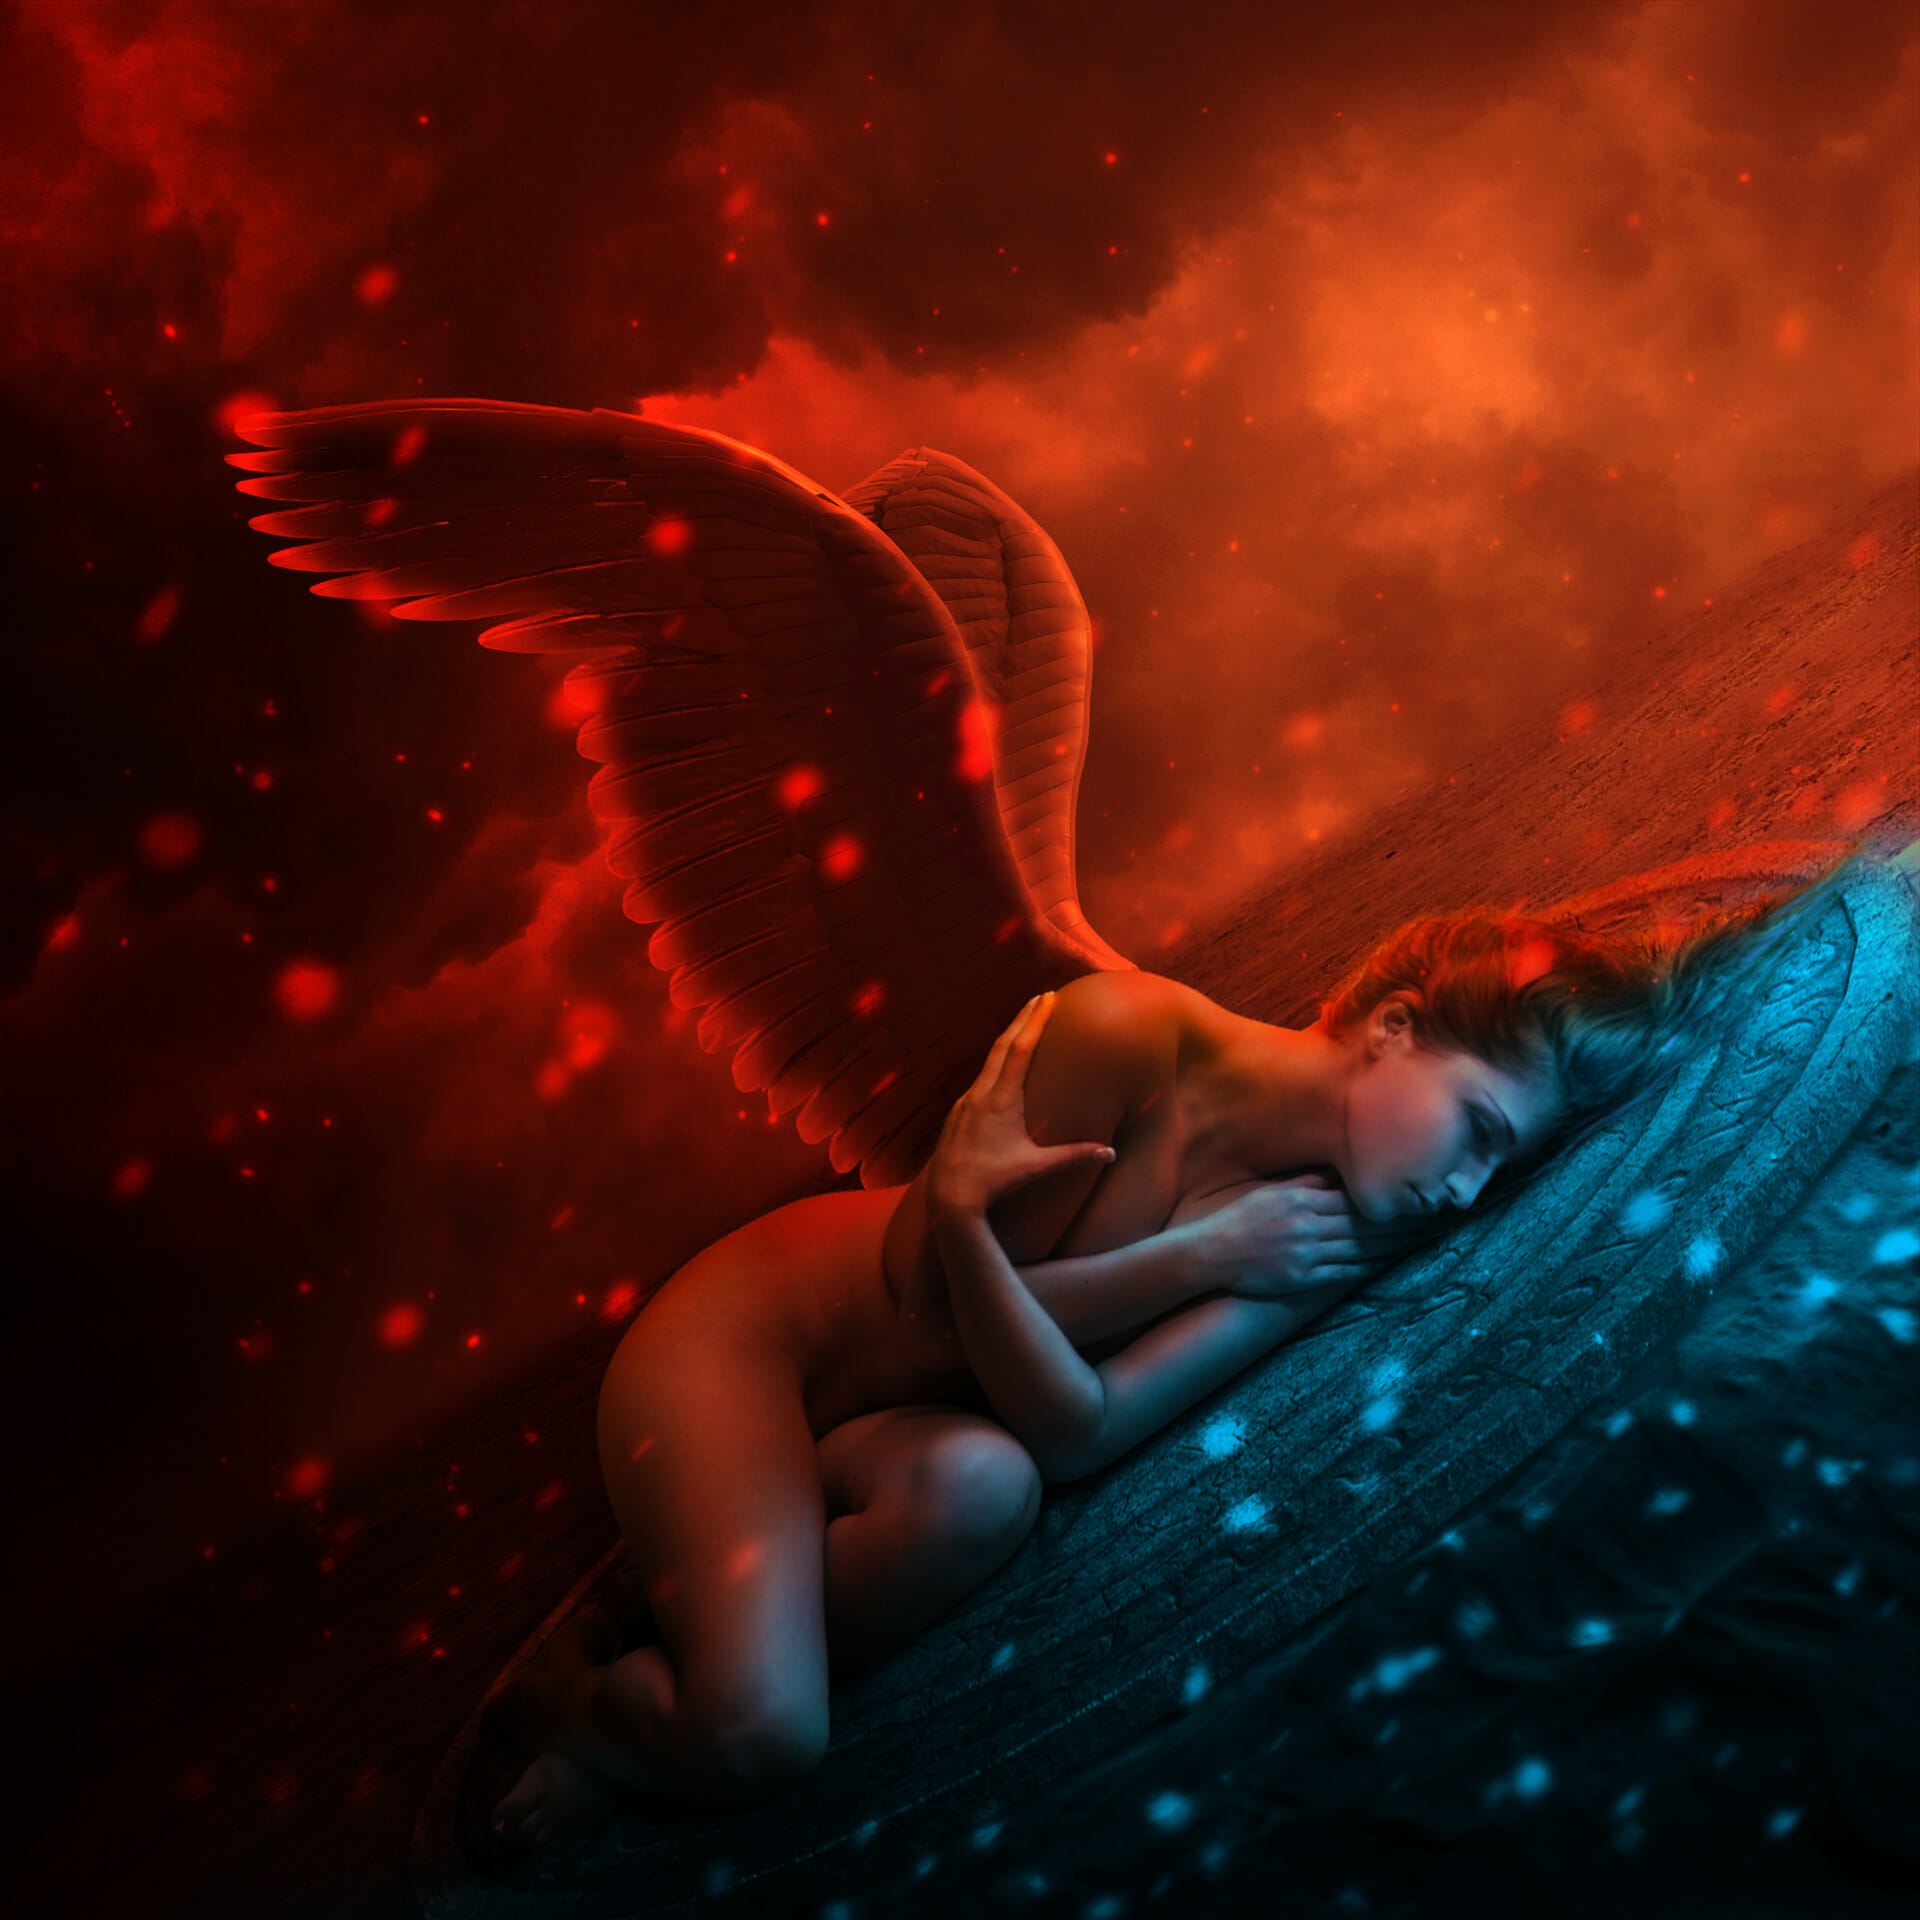 Create an Intense Fallen Angel Composition in Photoshop